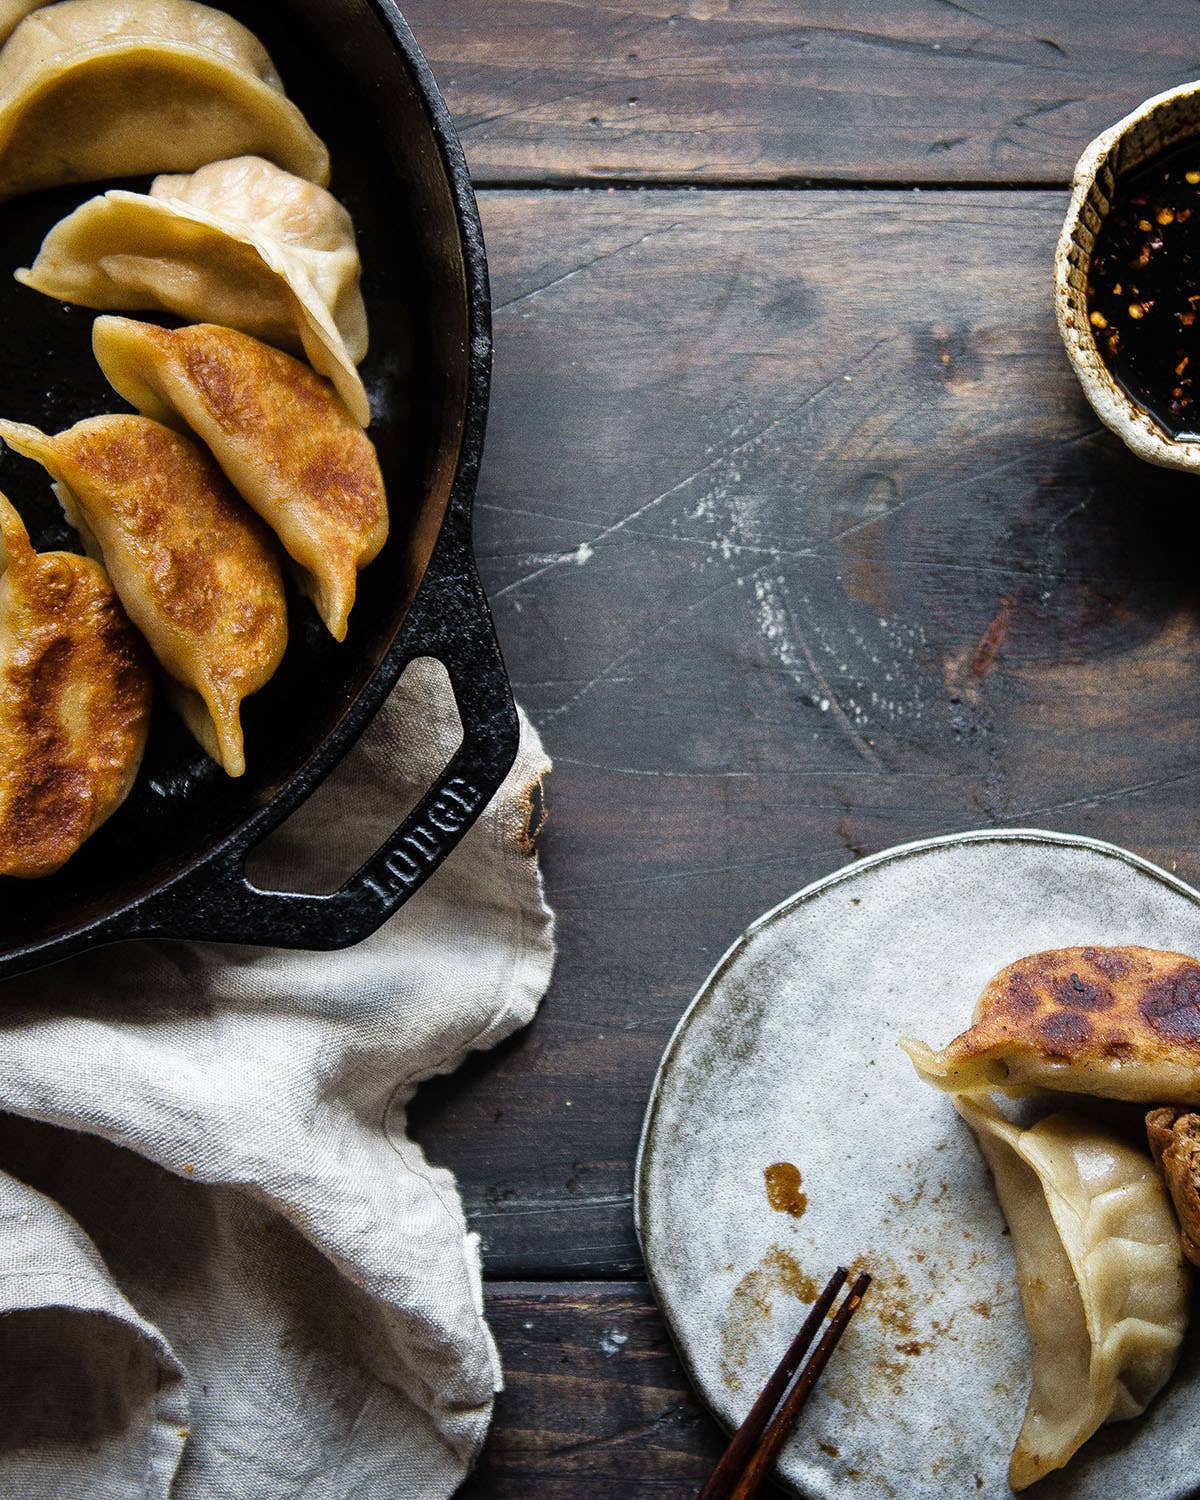 What to Cook This Weekend: The Joy of Dumplings